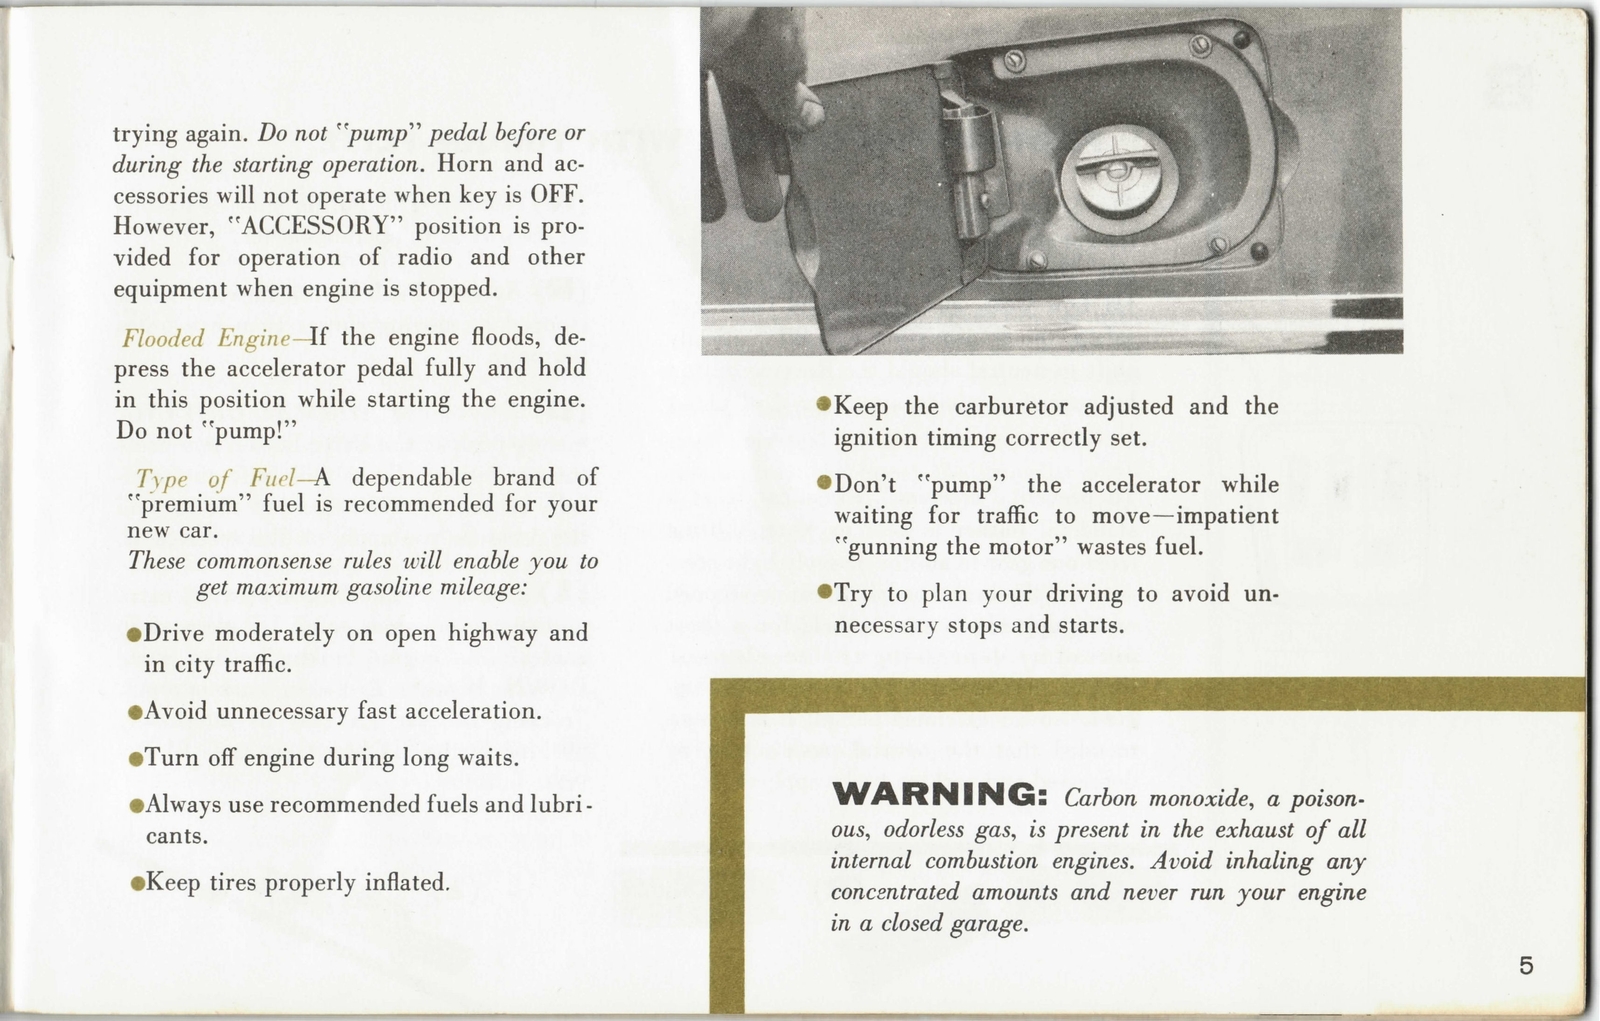 n_1957 Chrysler Manual-05.jpg